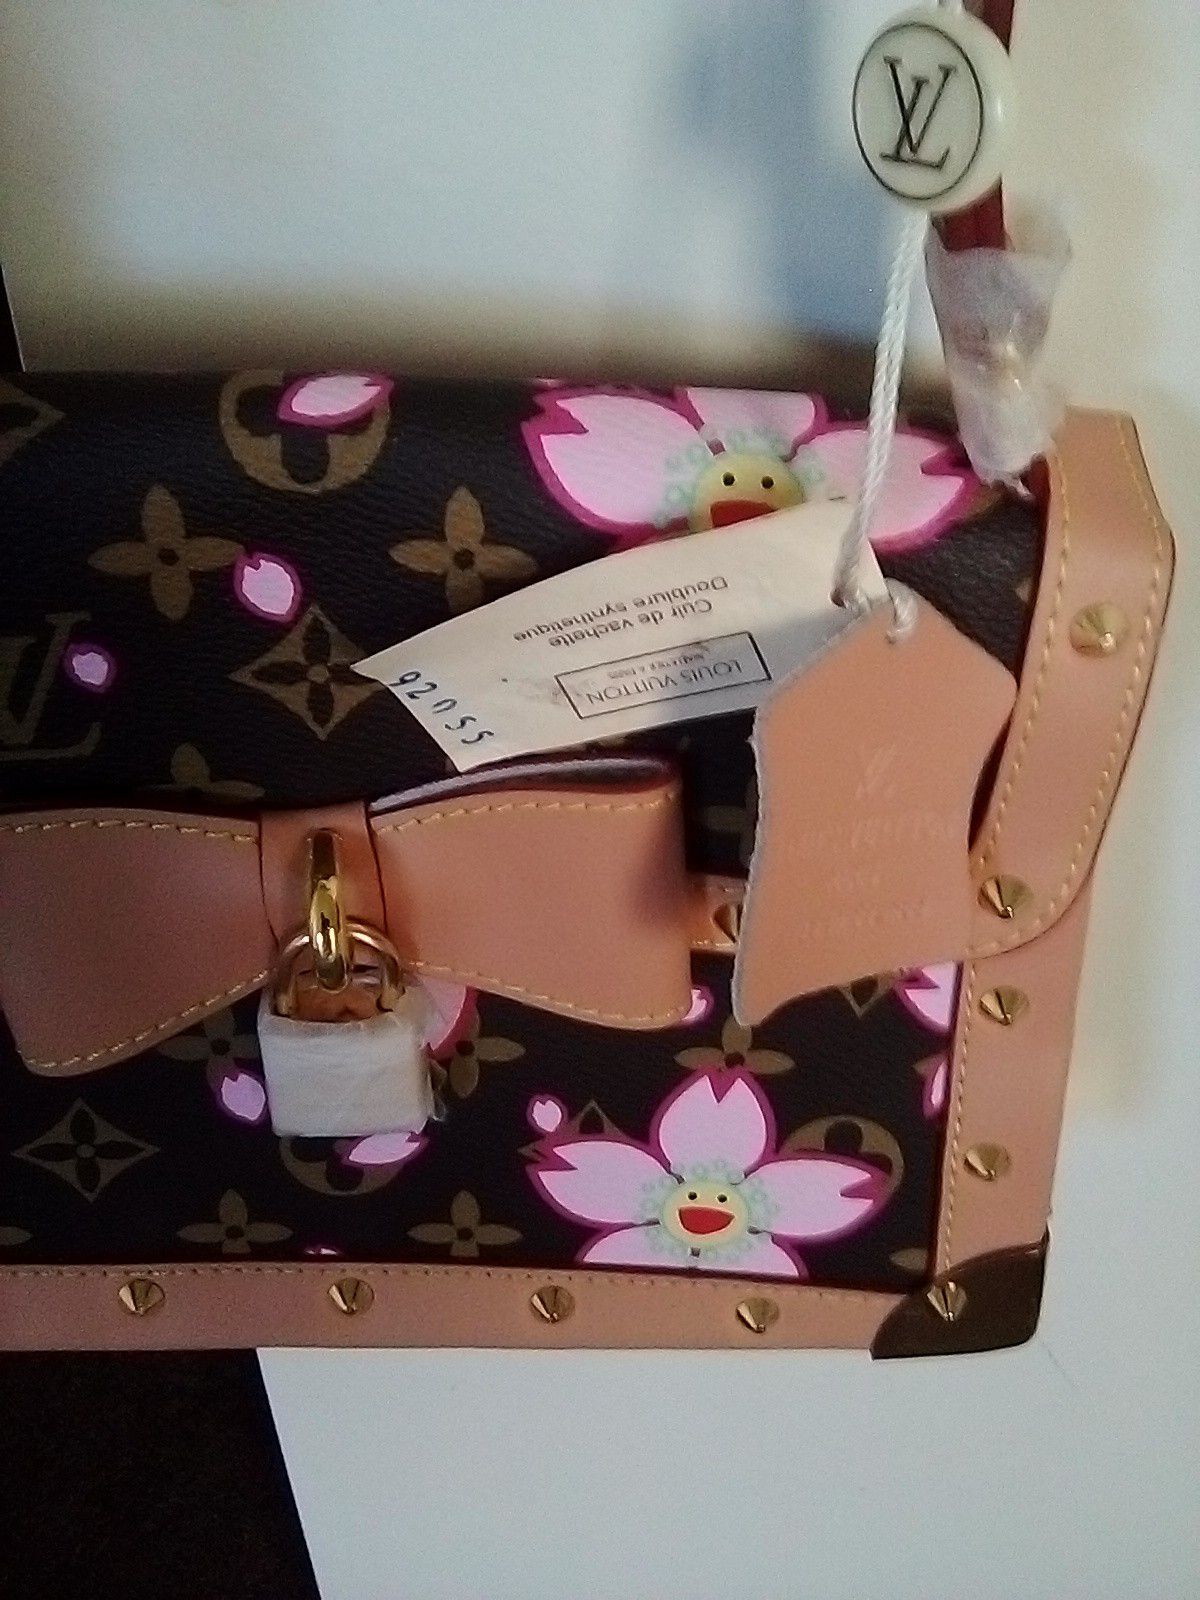 Louis Vuitton x Takashi Murakami Cherry Blossom Monogram Pink Color Bag  Pochette for Sale in Village, OK - OfferUp